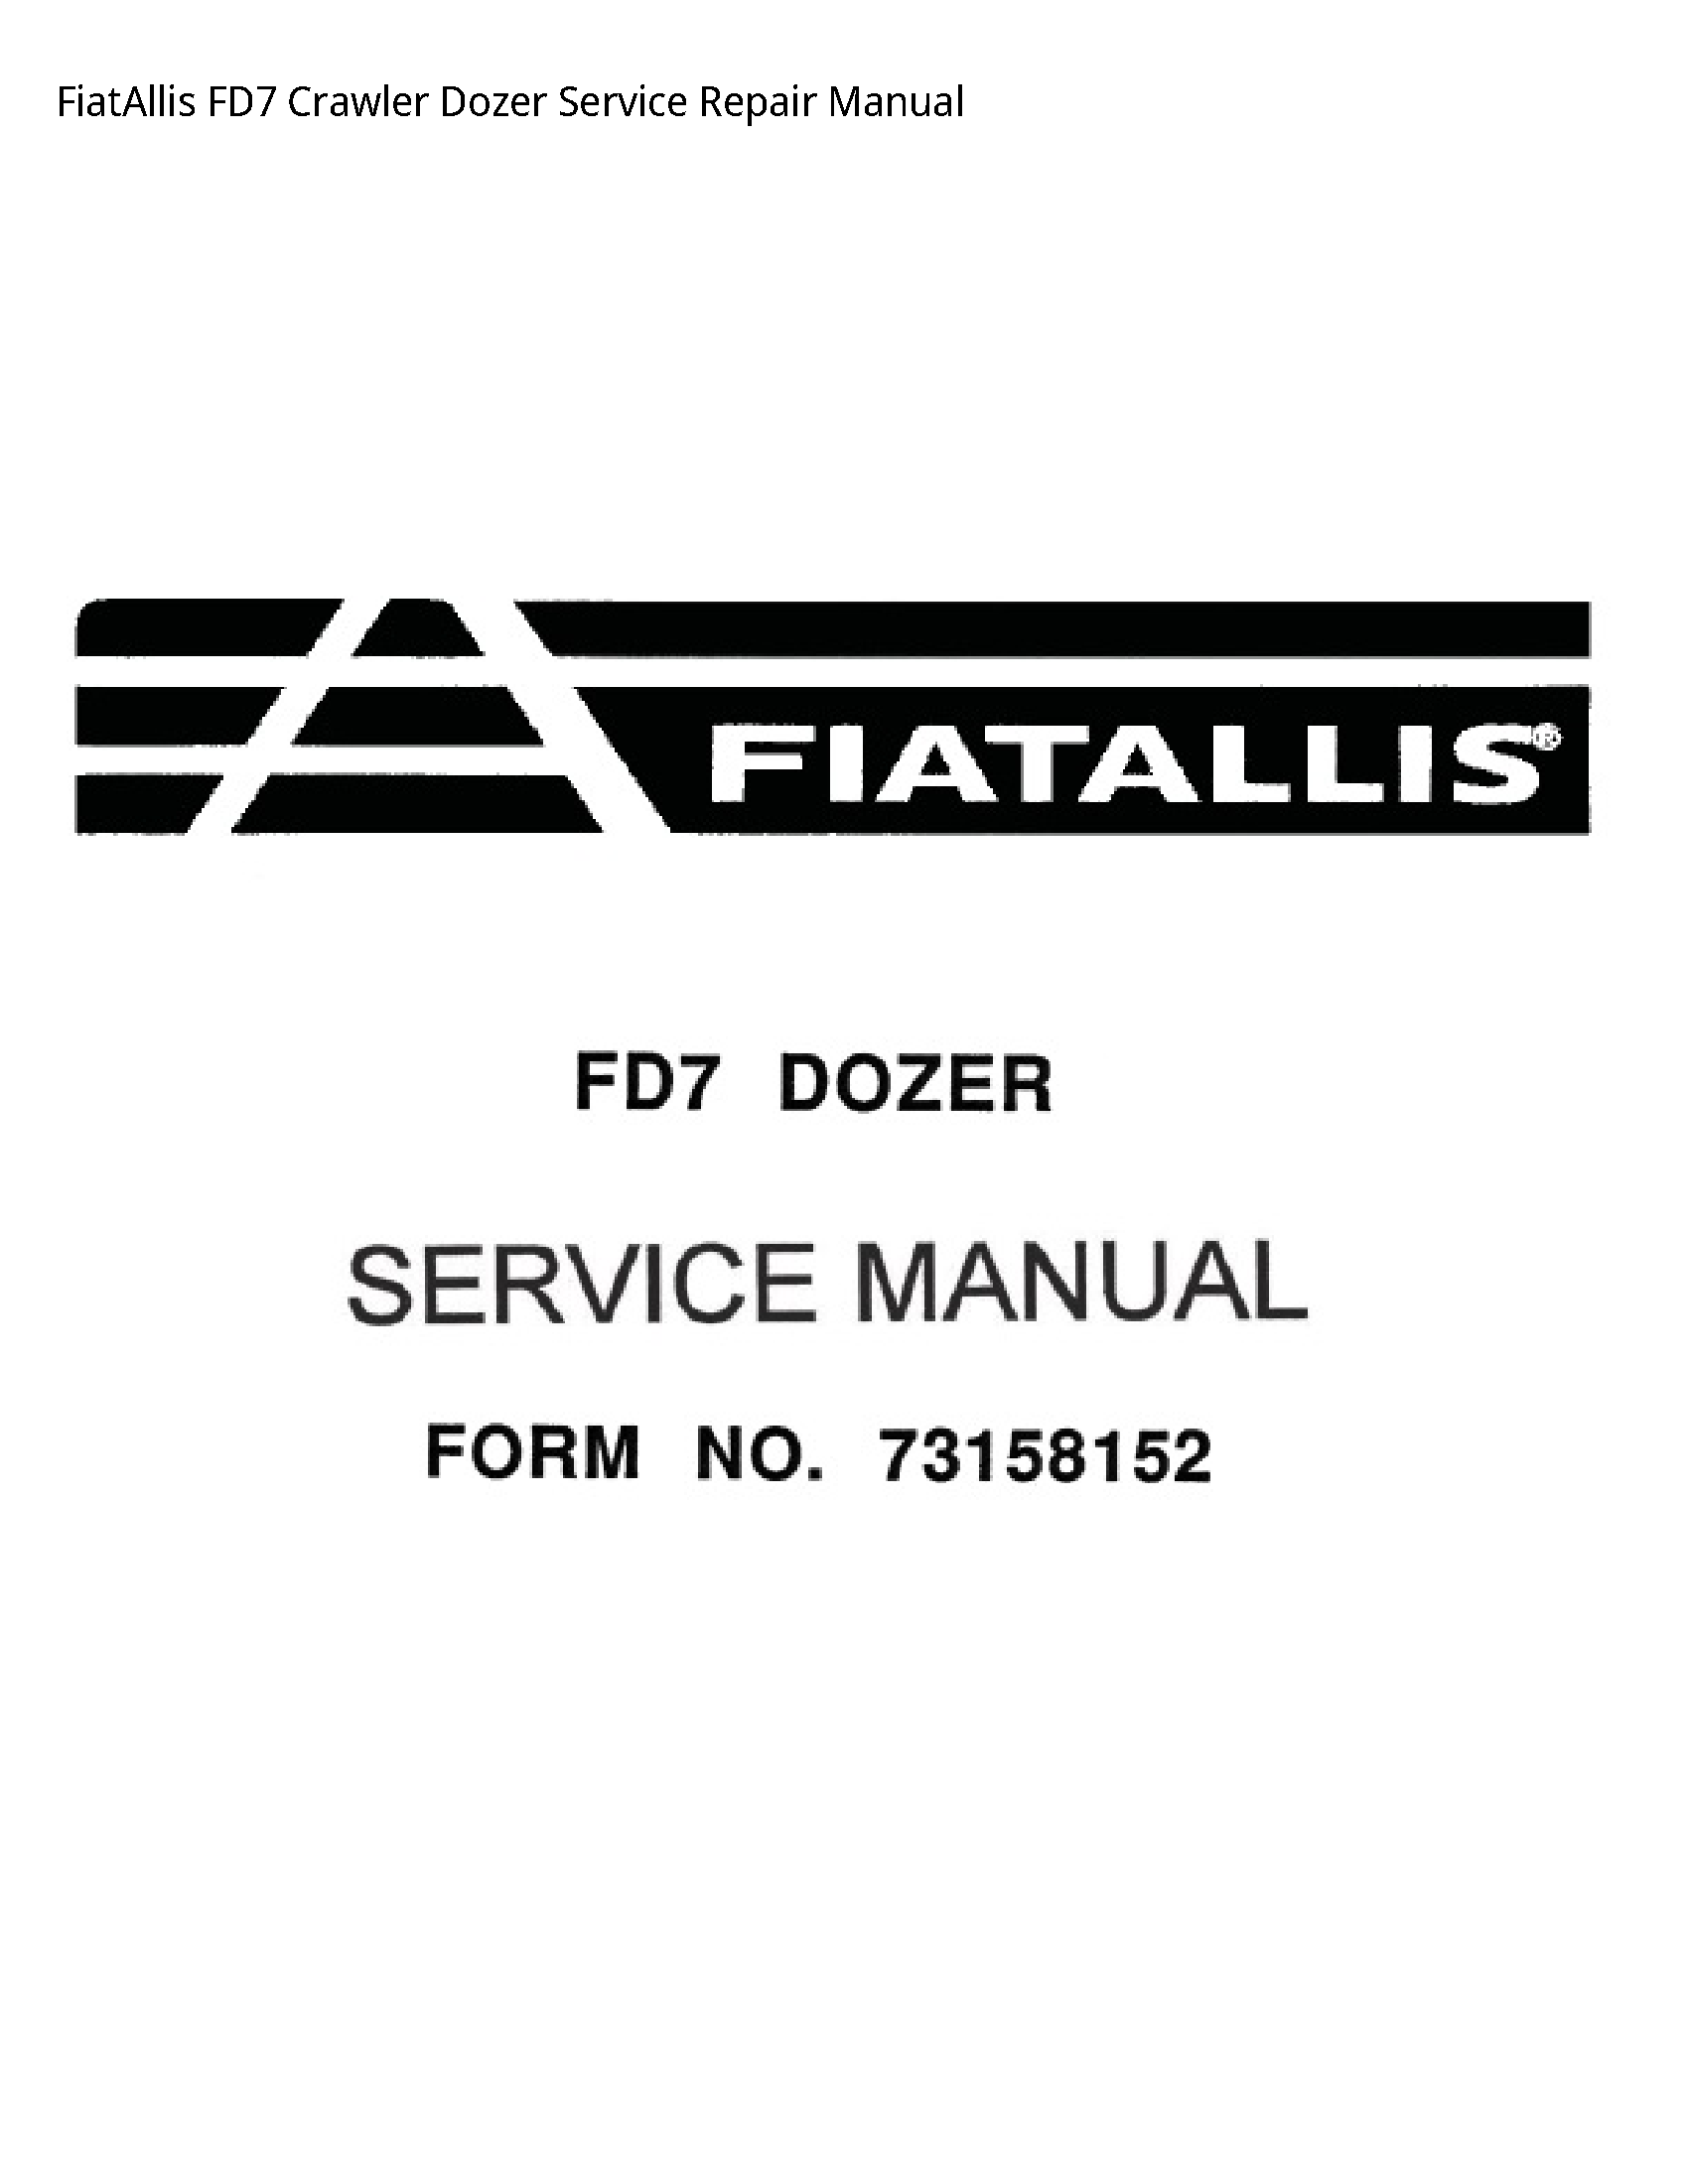 Fiatallis FD7 Crawler Dozer manual